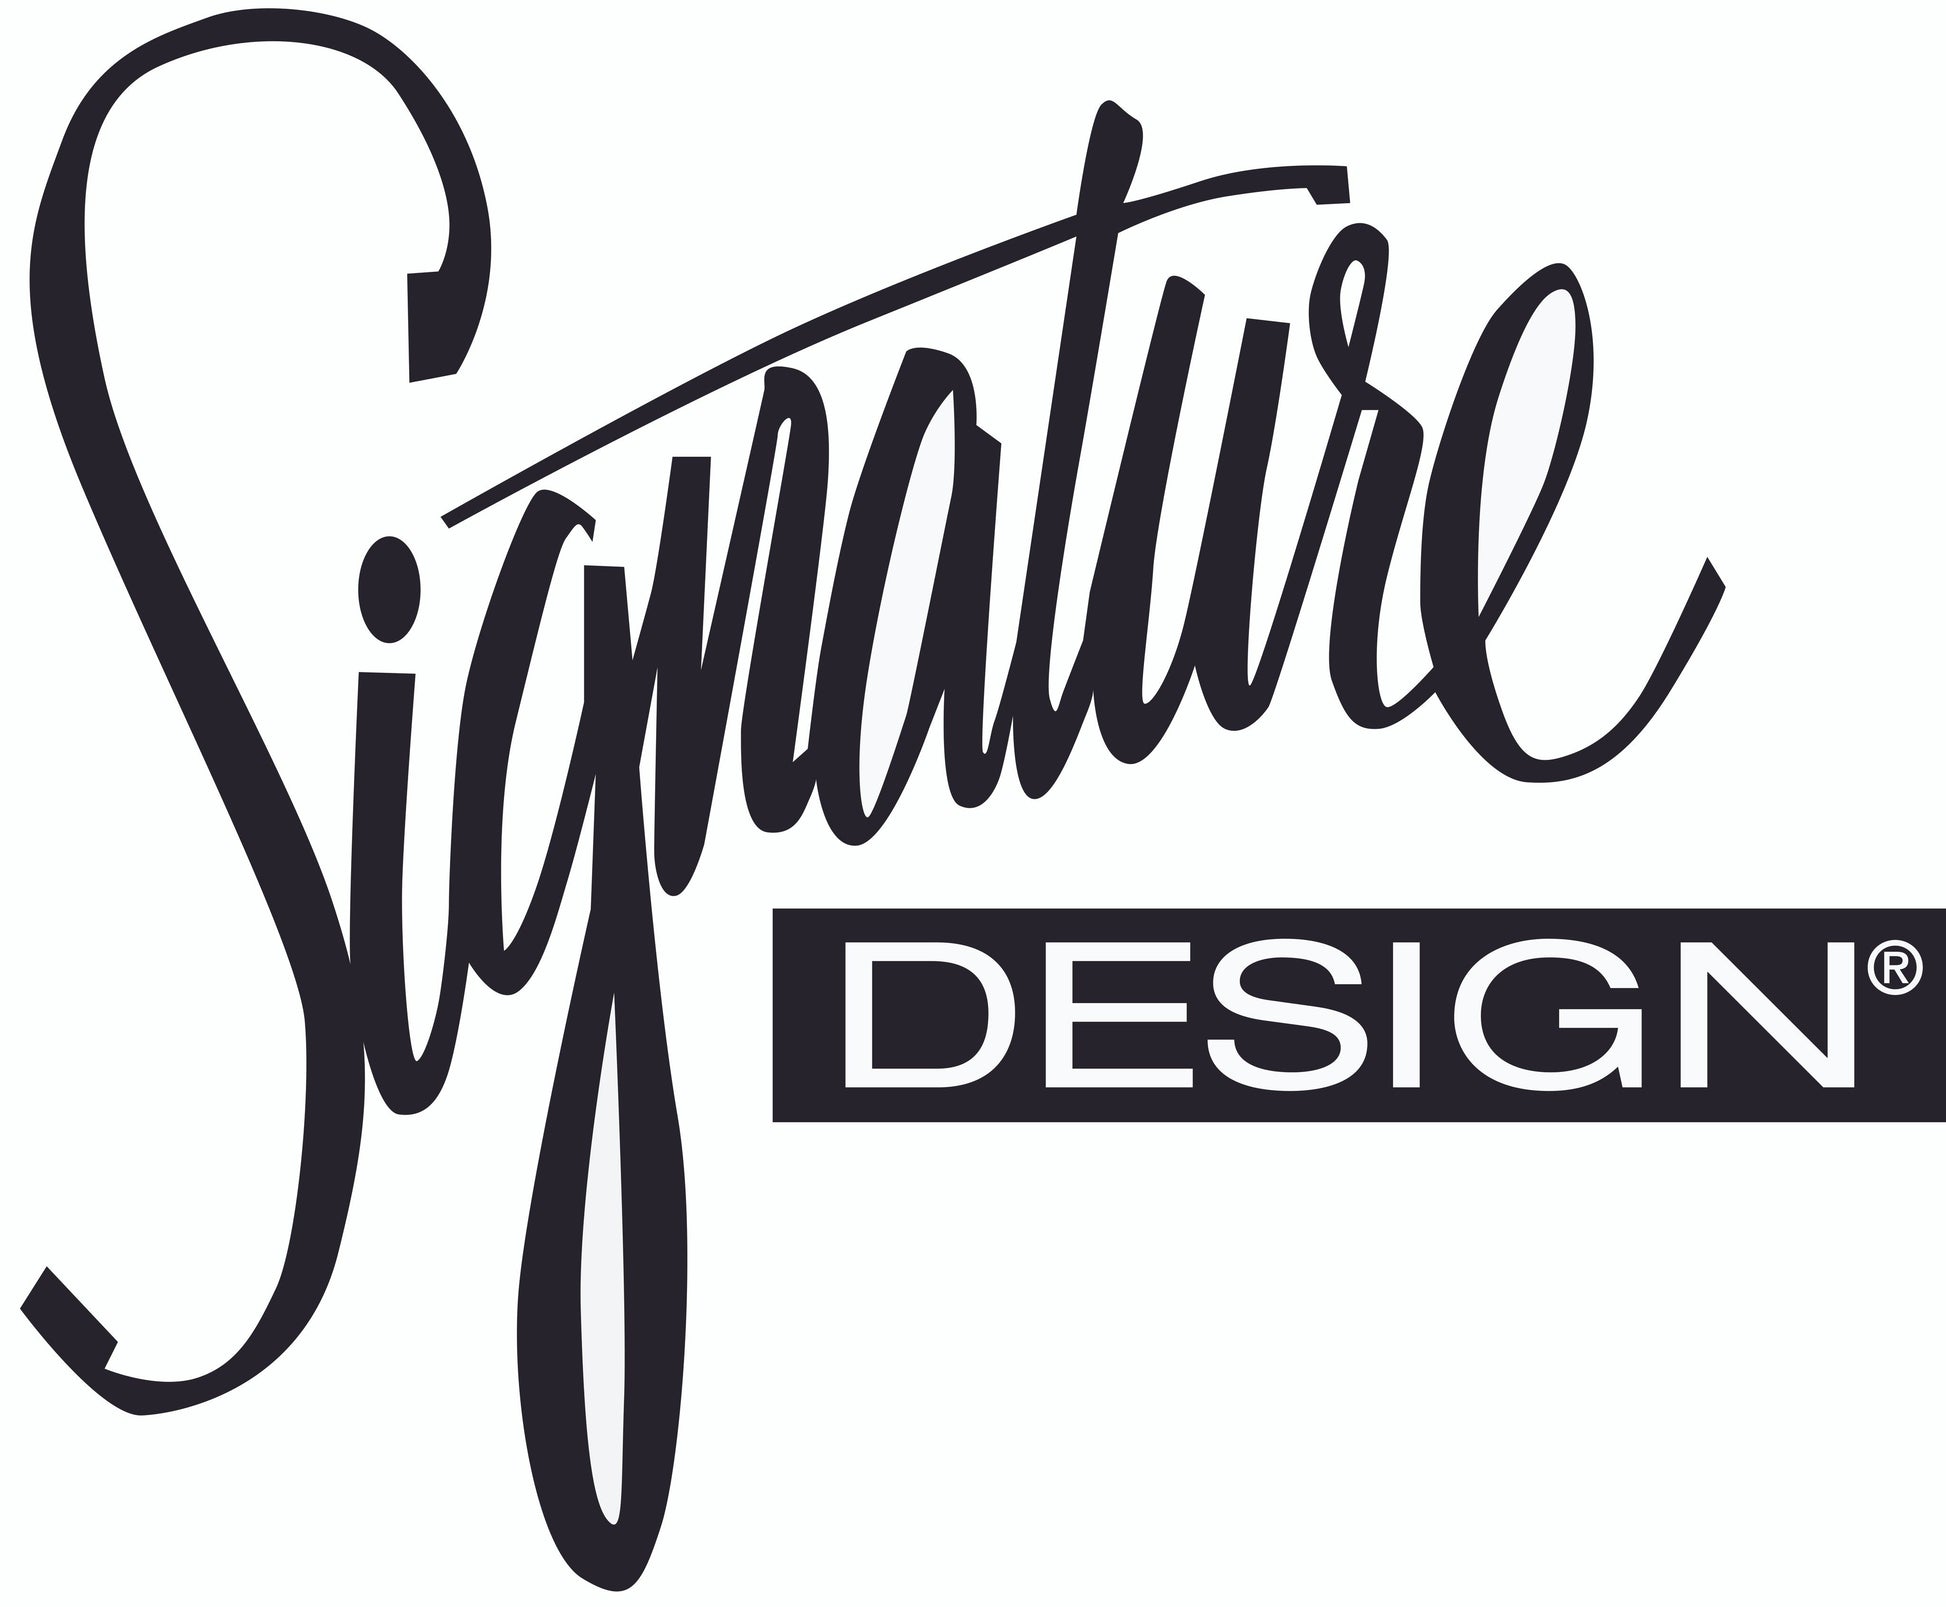 Brycestone Metal Lamps (3/CN) Signature Design by Ashley®